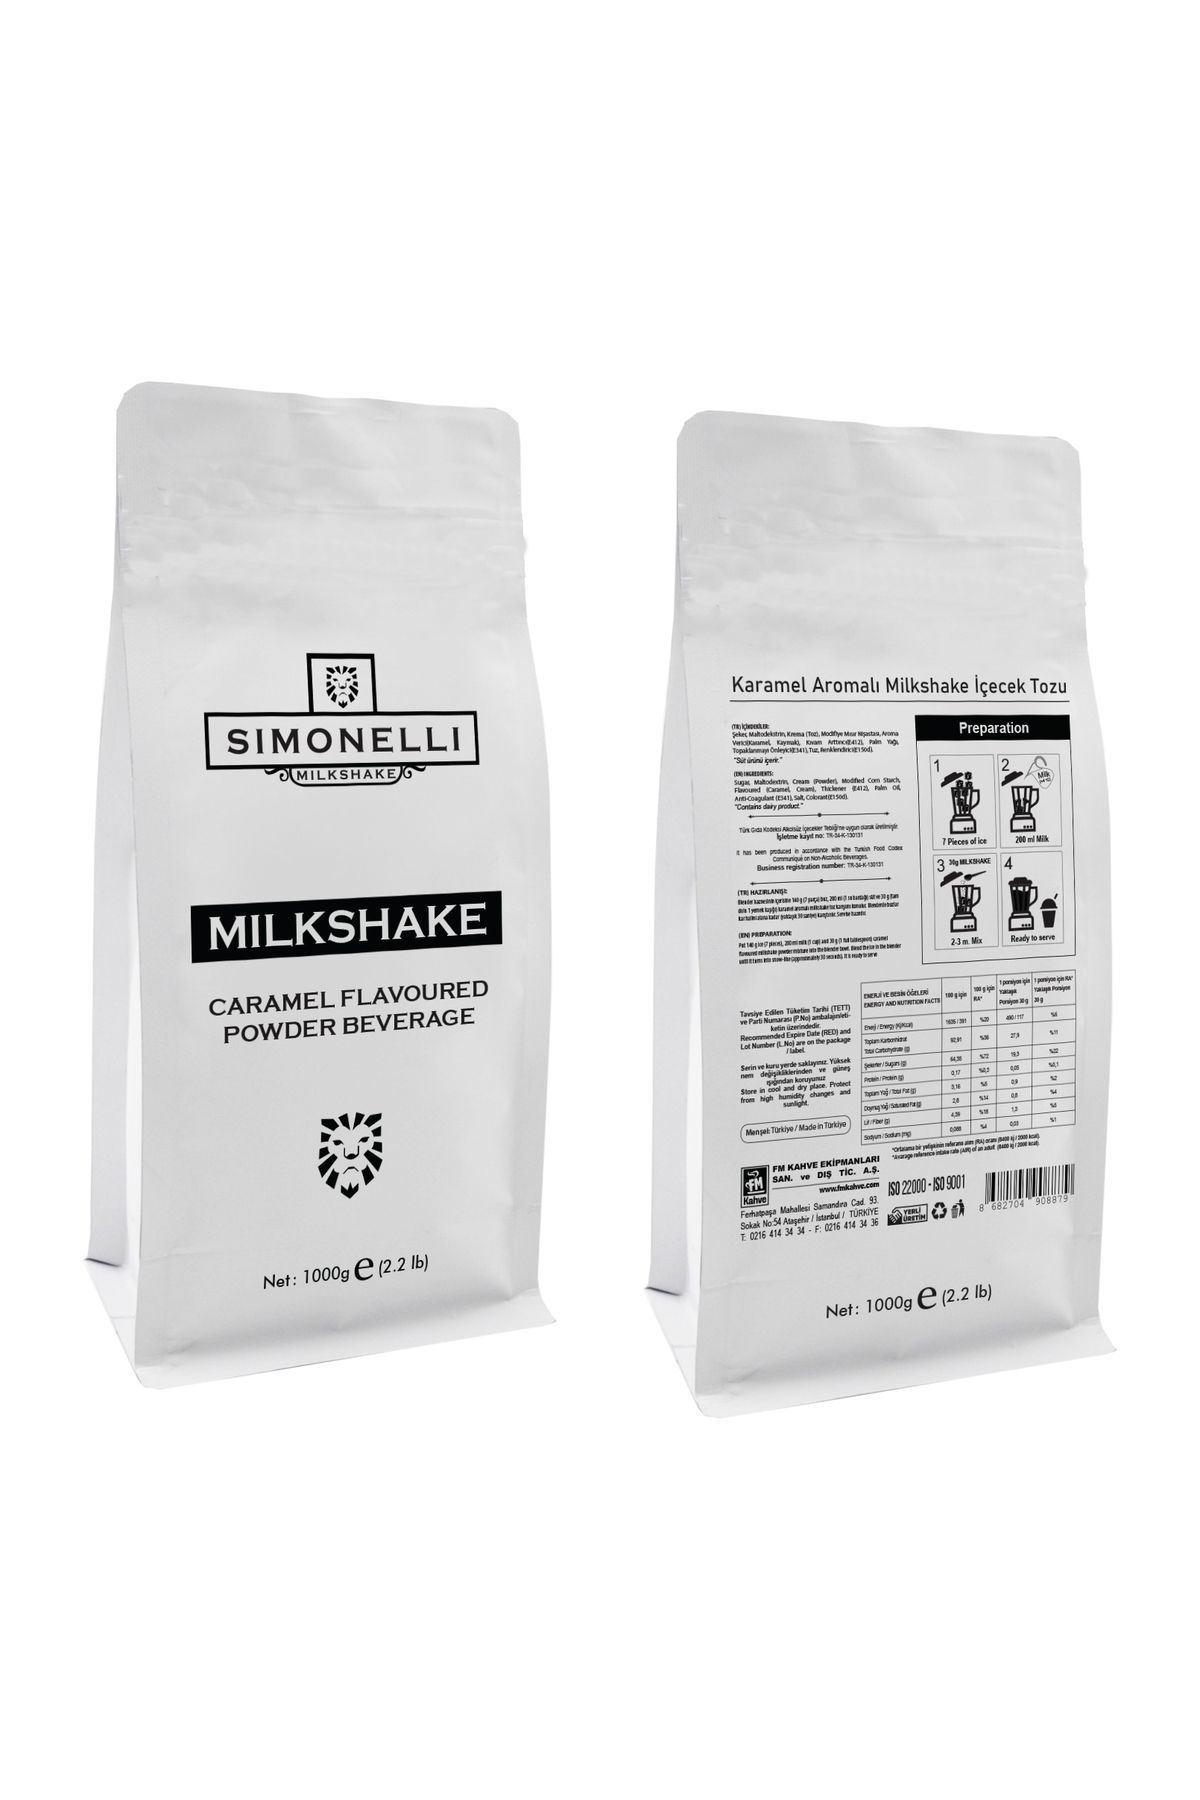 Simonelli Milkshake Karamel Aromalı 1000g Paket